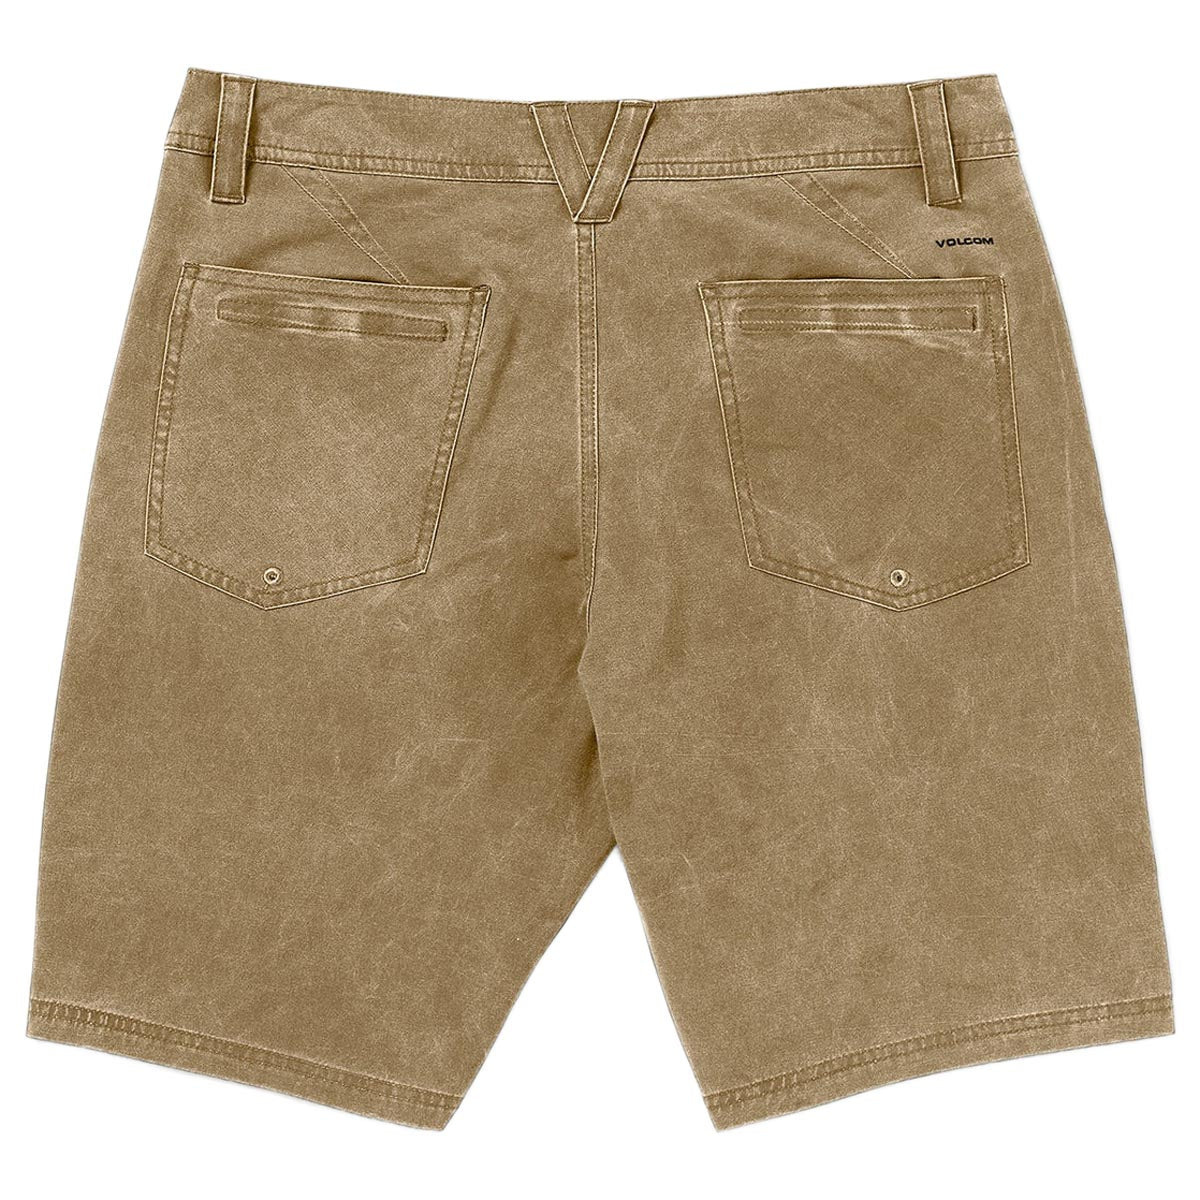 Volcom Stone Faded Hybrid 19 Shorts - Dark Khaki image 2